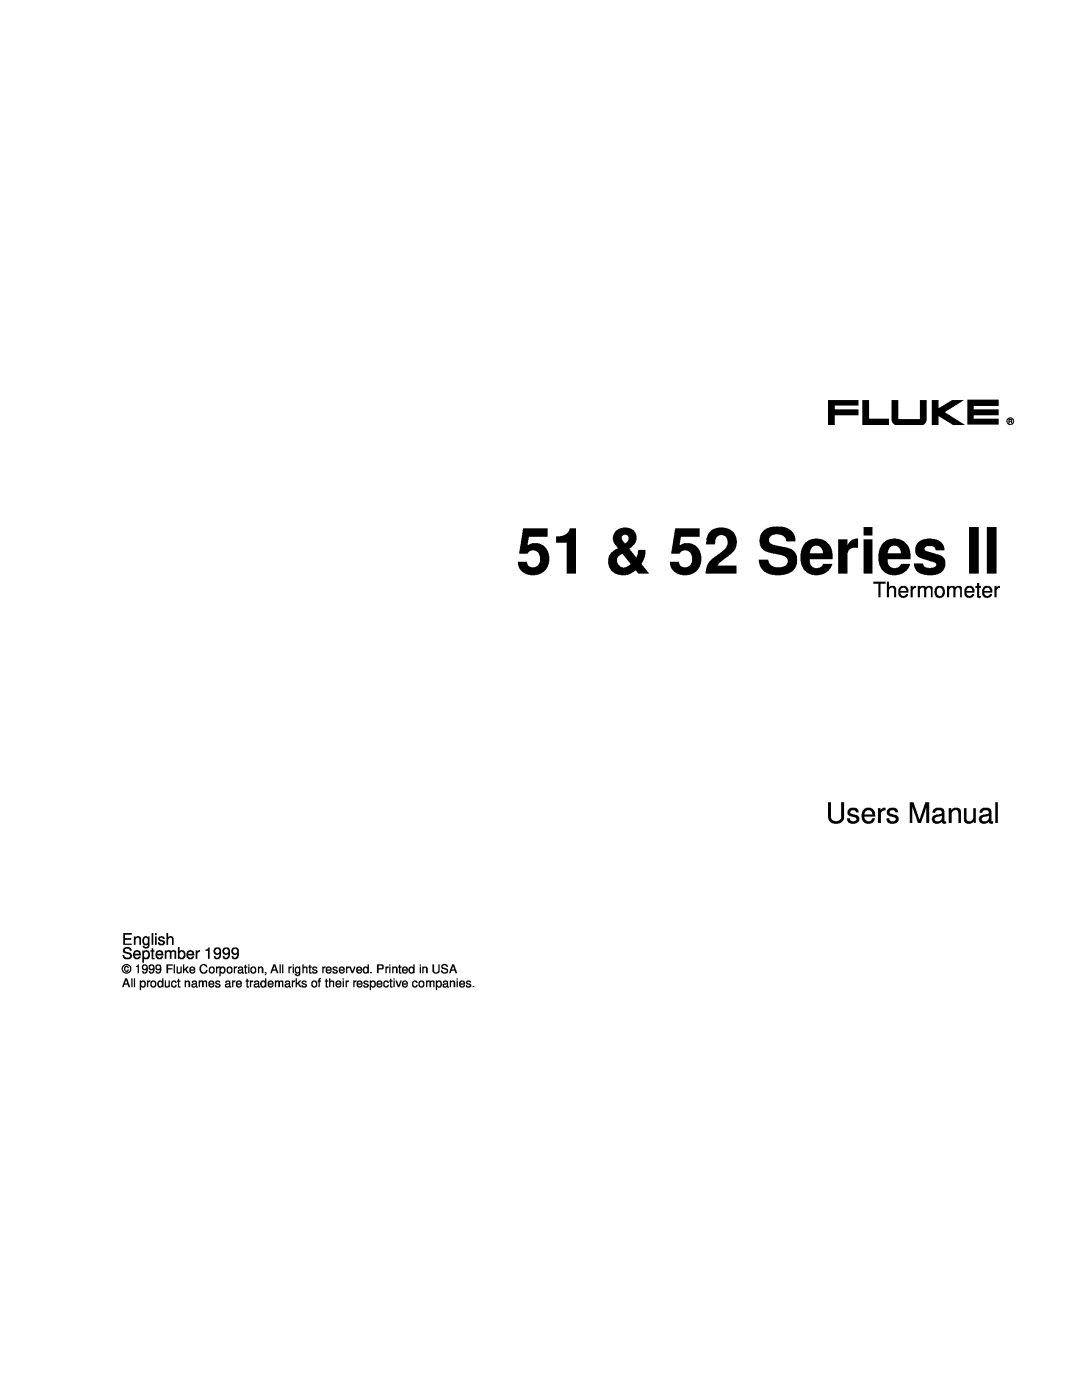 Fluke 51 & 52 Series II user manual Users Manual, Thermometer 